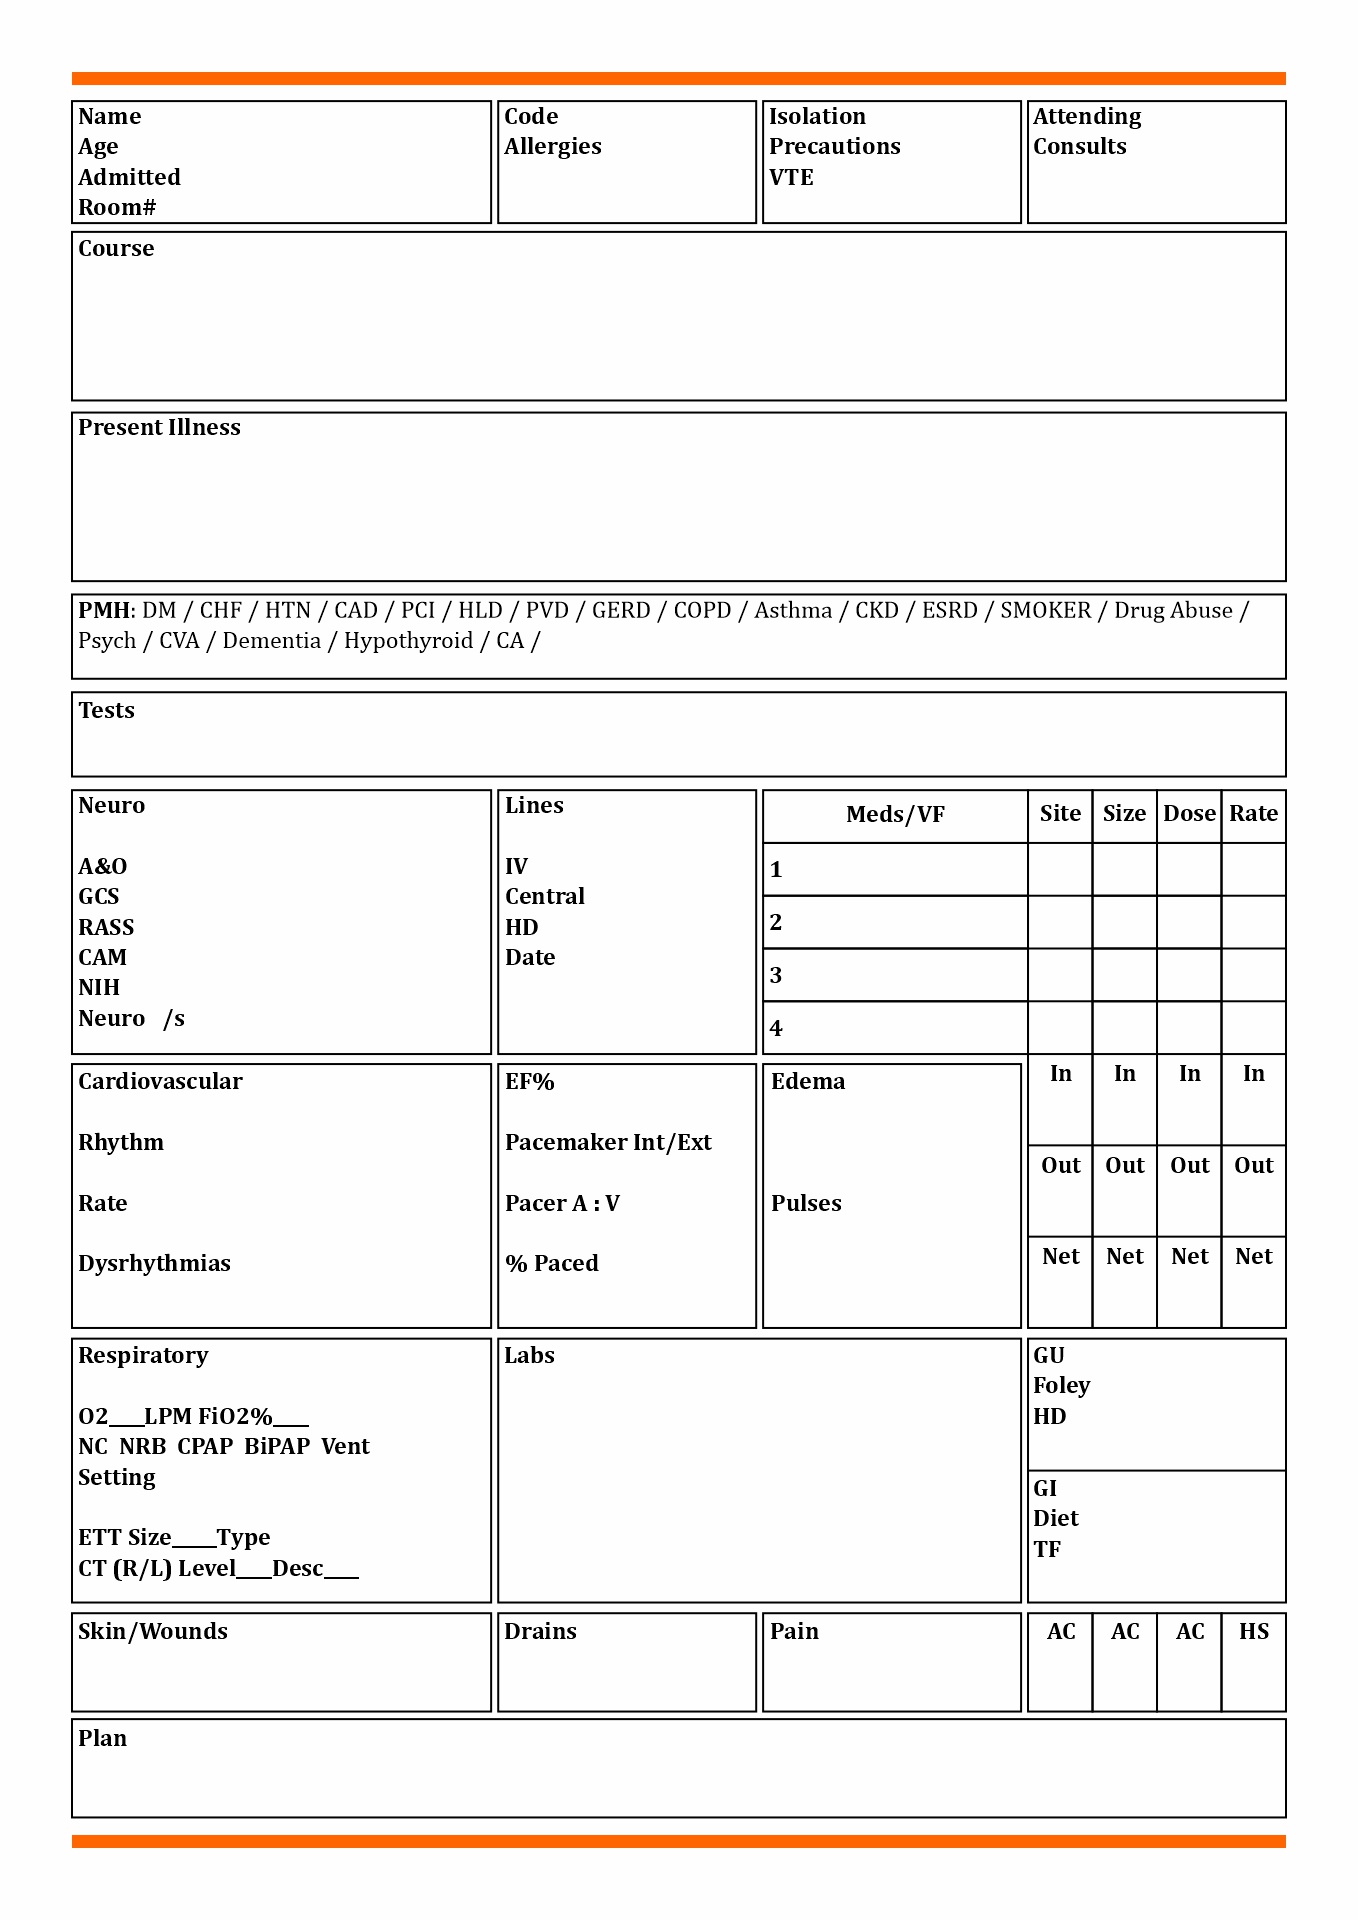 Printable Nursing Report Sheets Nurses